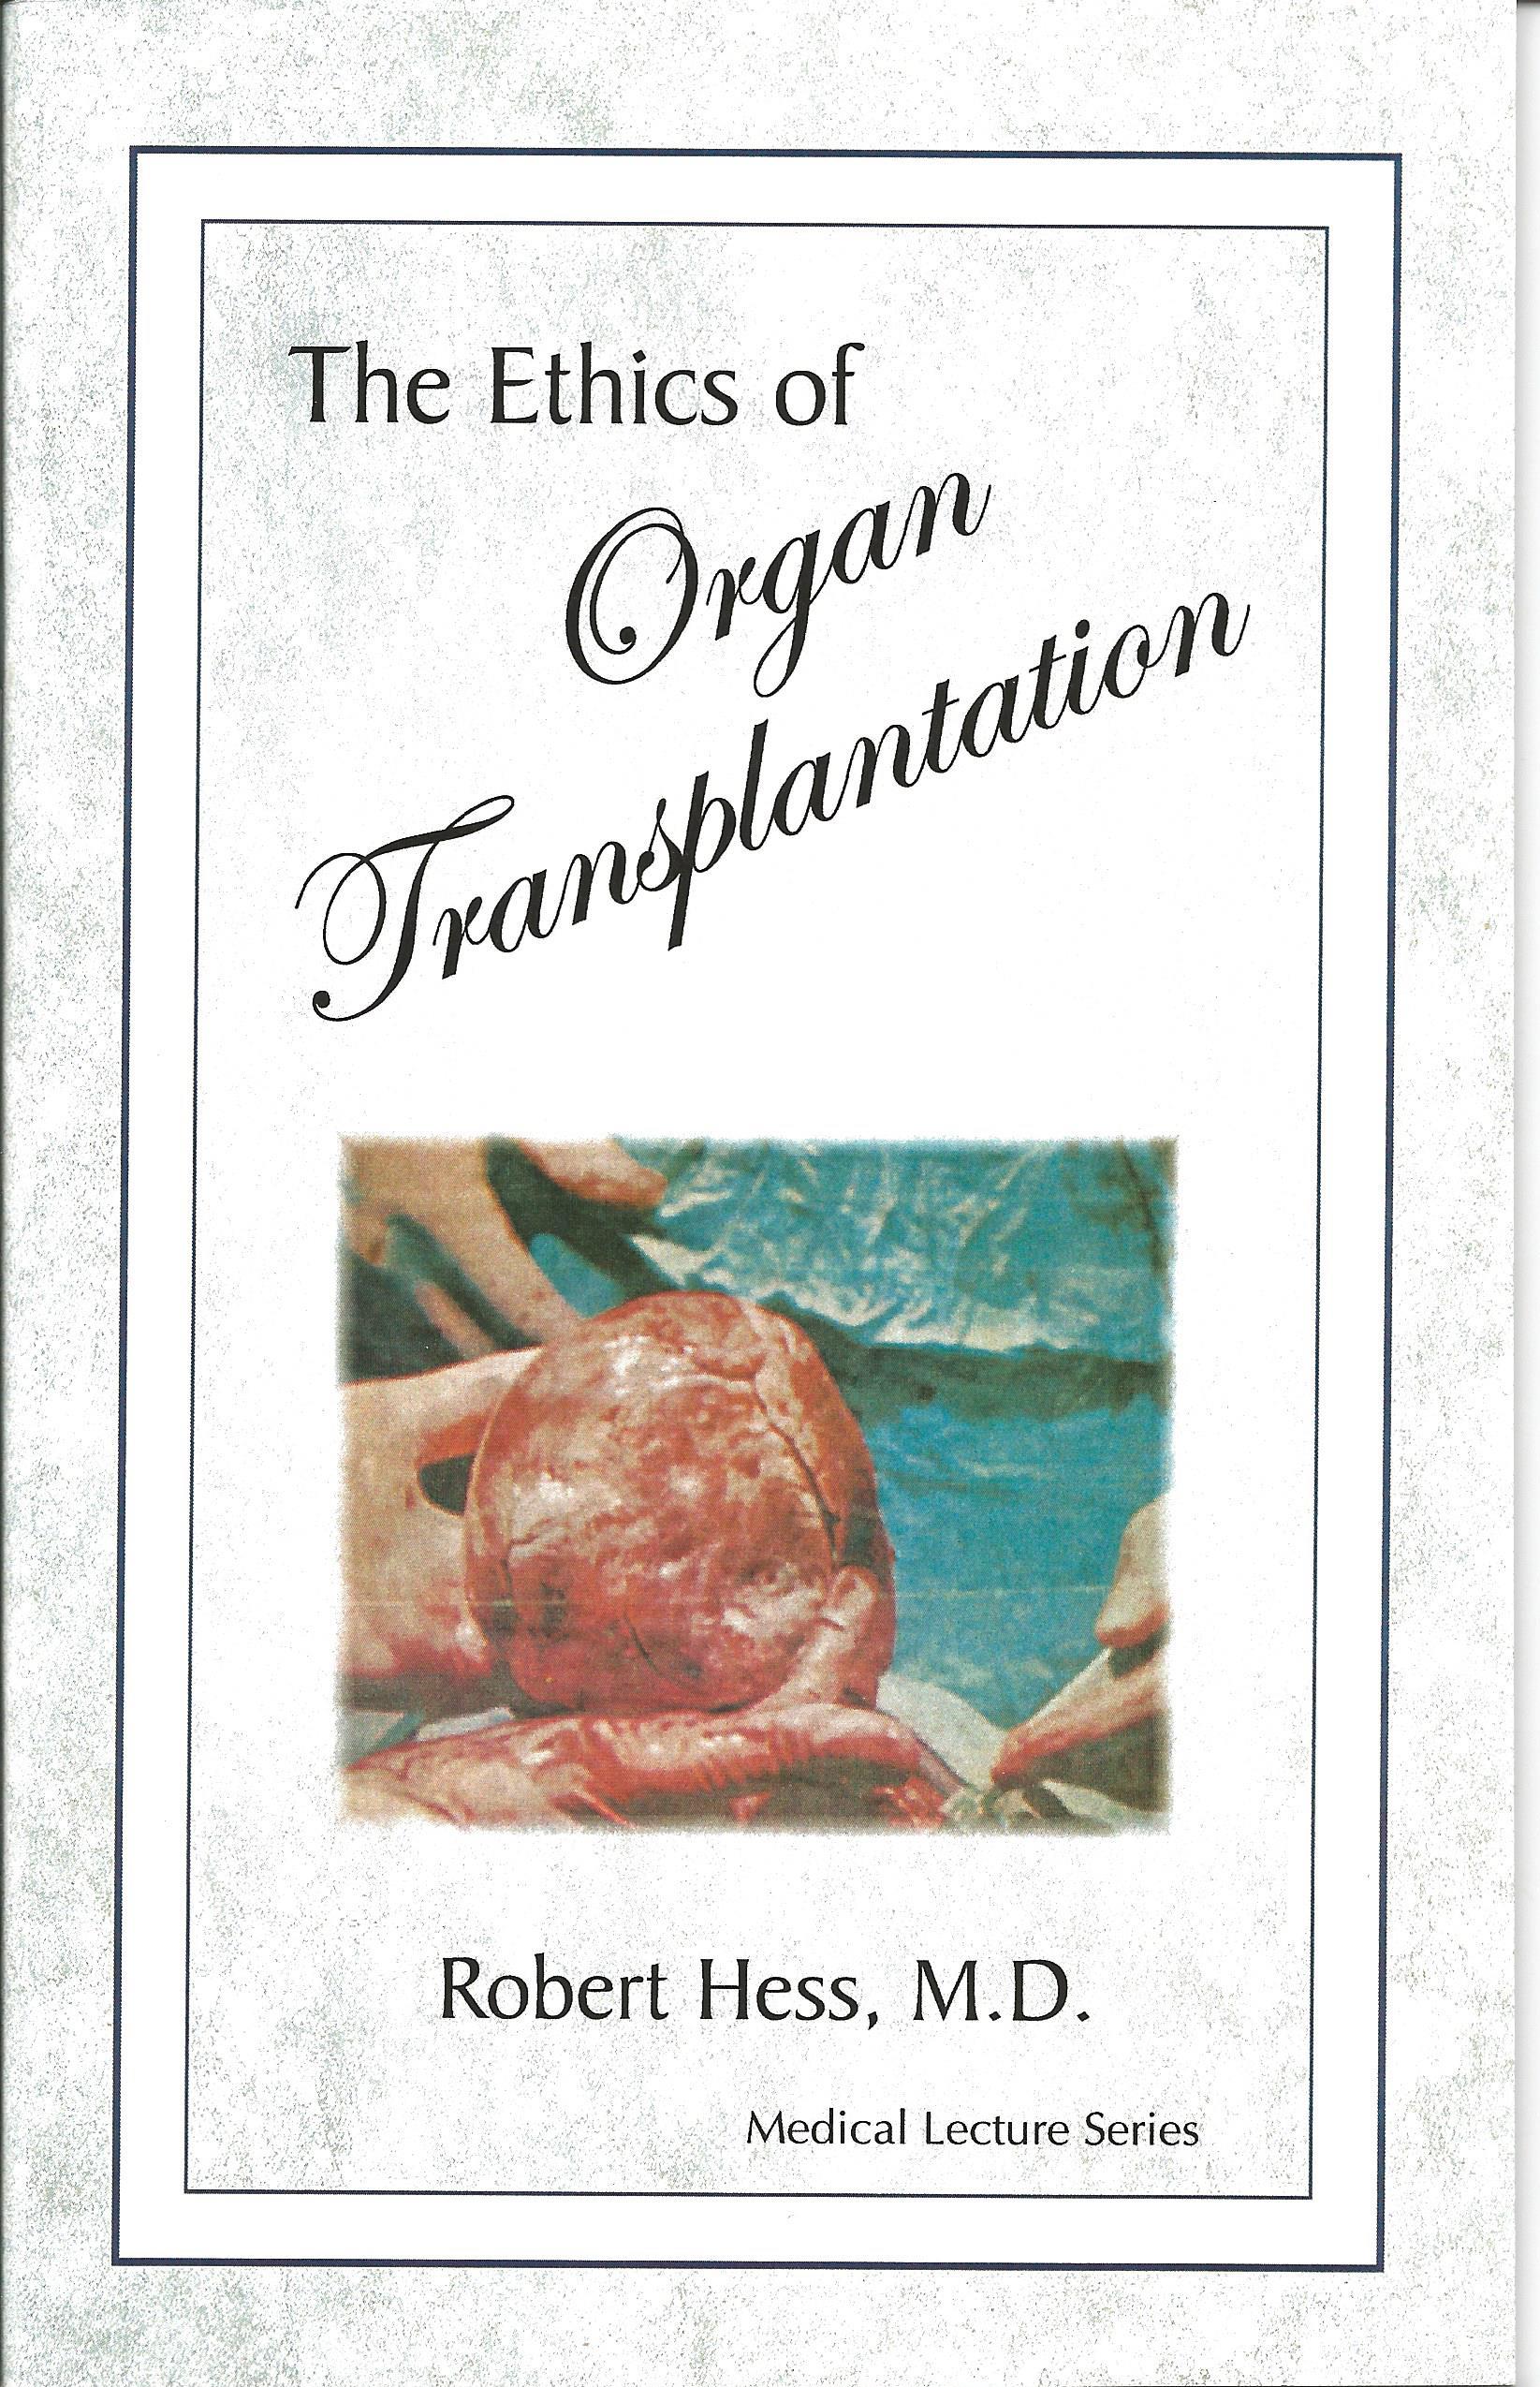 THE ETHICS OF ORGAN TRANSPLANTATION Robert Hess, M.D.